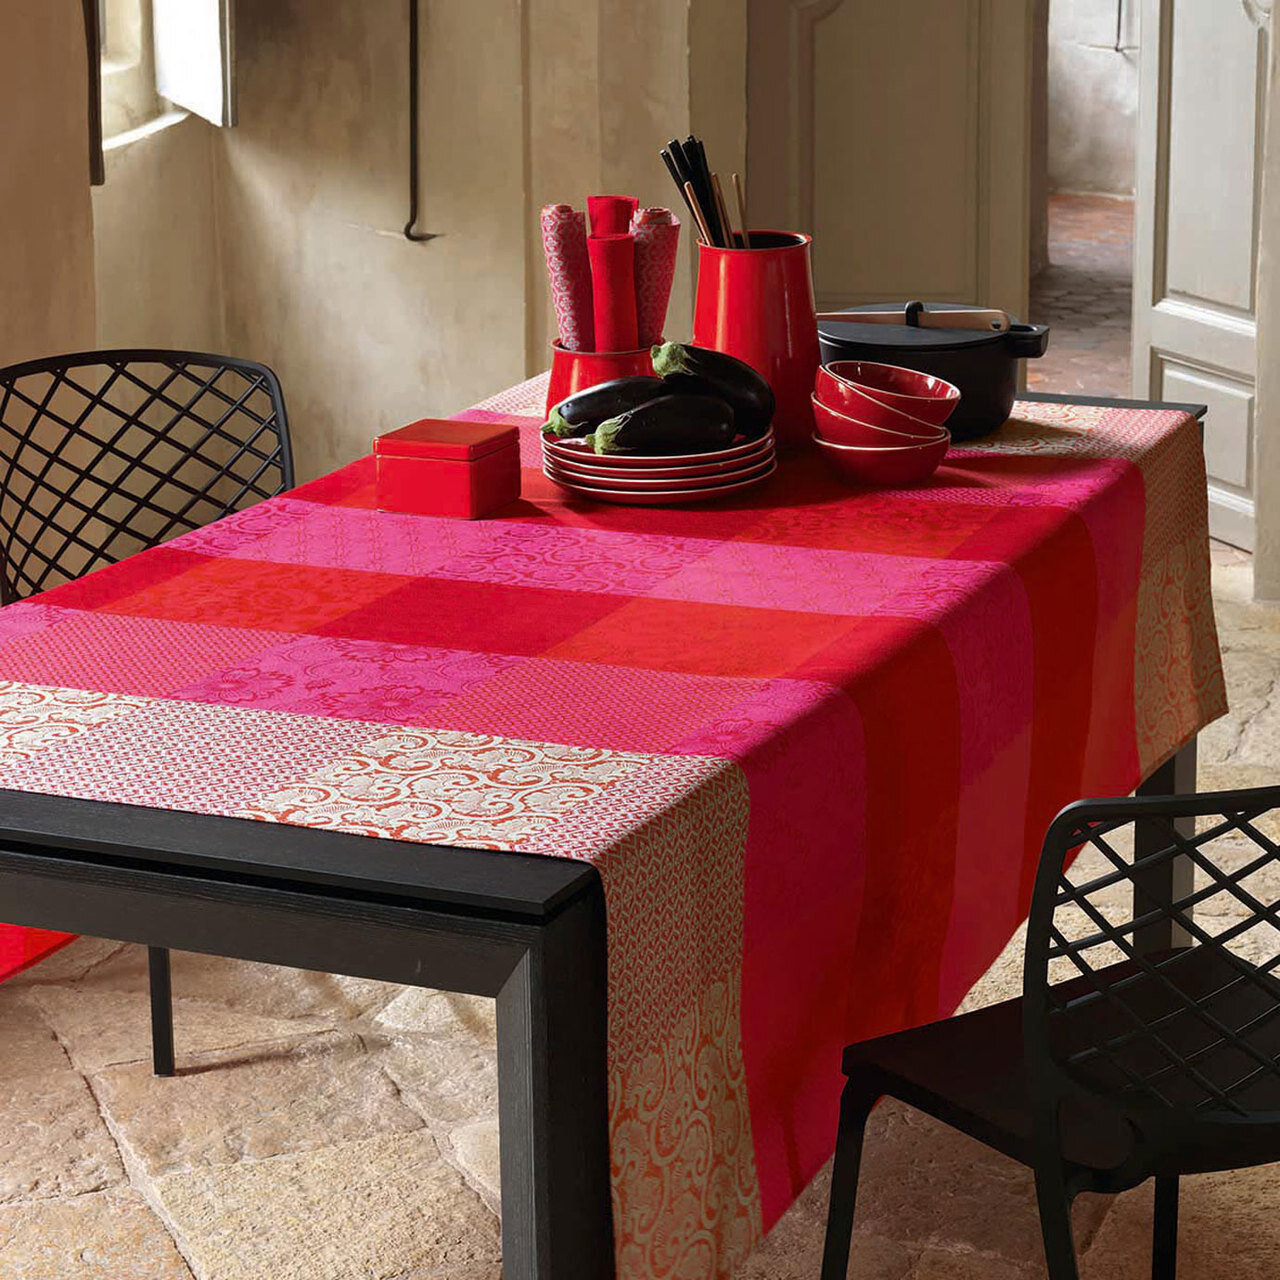 Le Jacquard Francais Tablecloth Kyoto Cherry 59 x 59 Cotton and Acrylicic